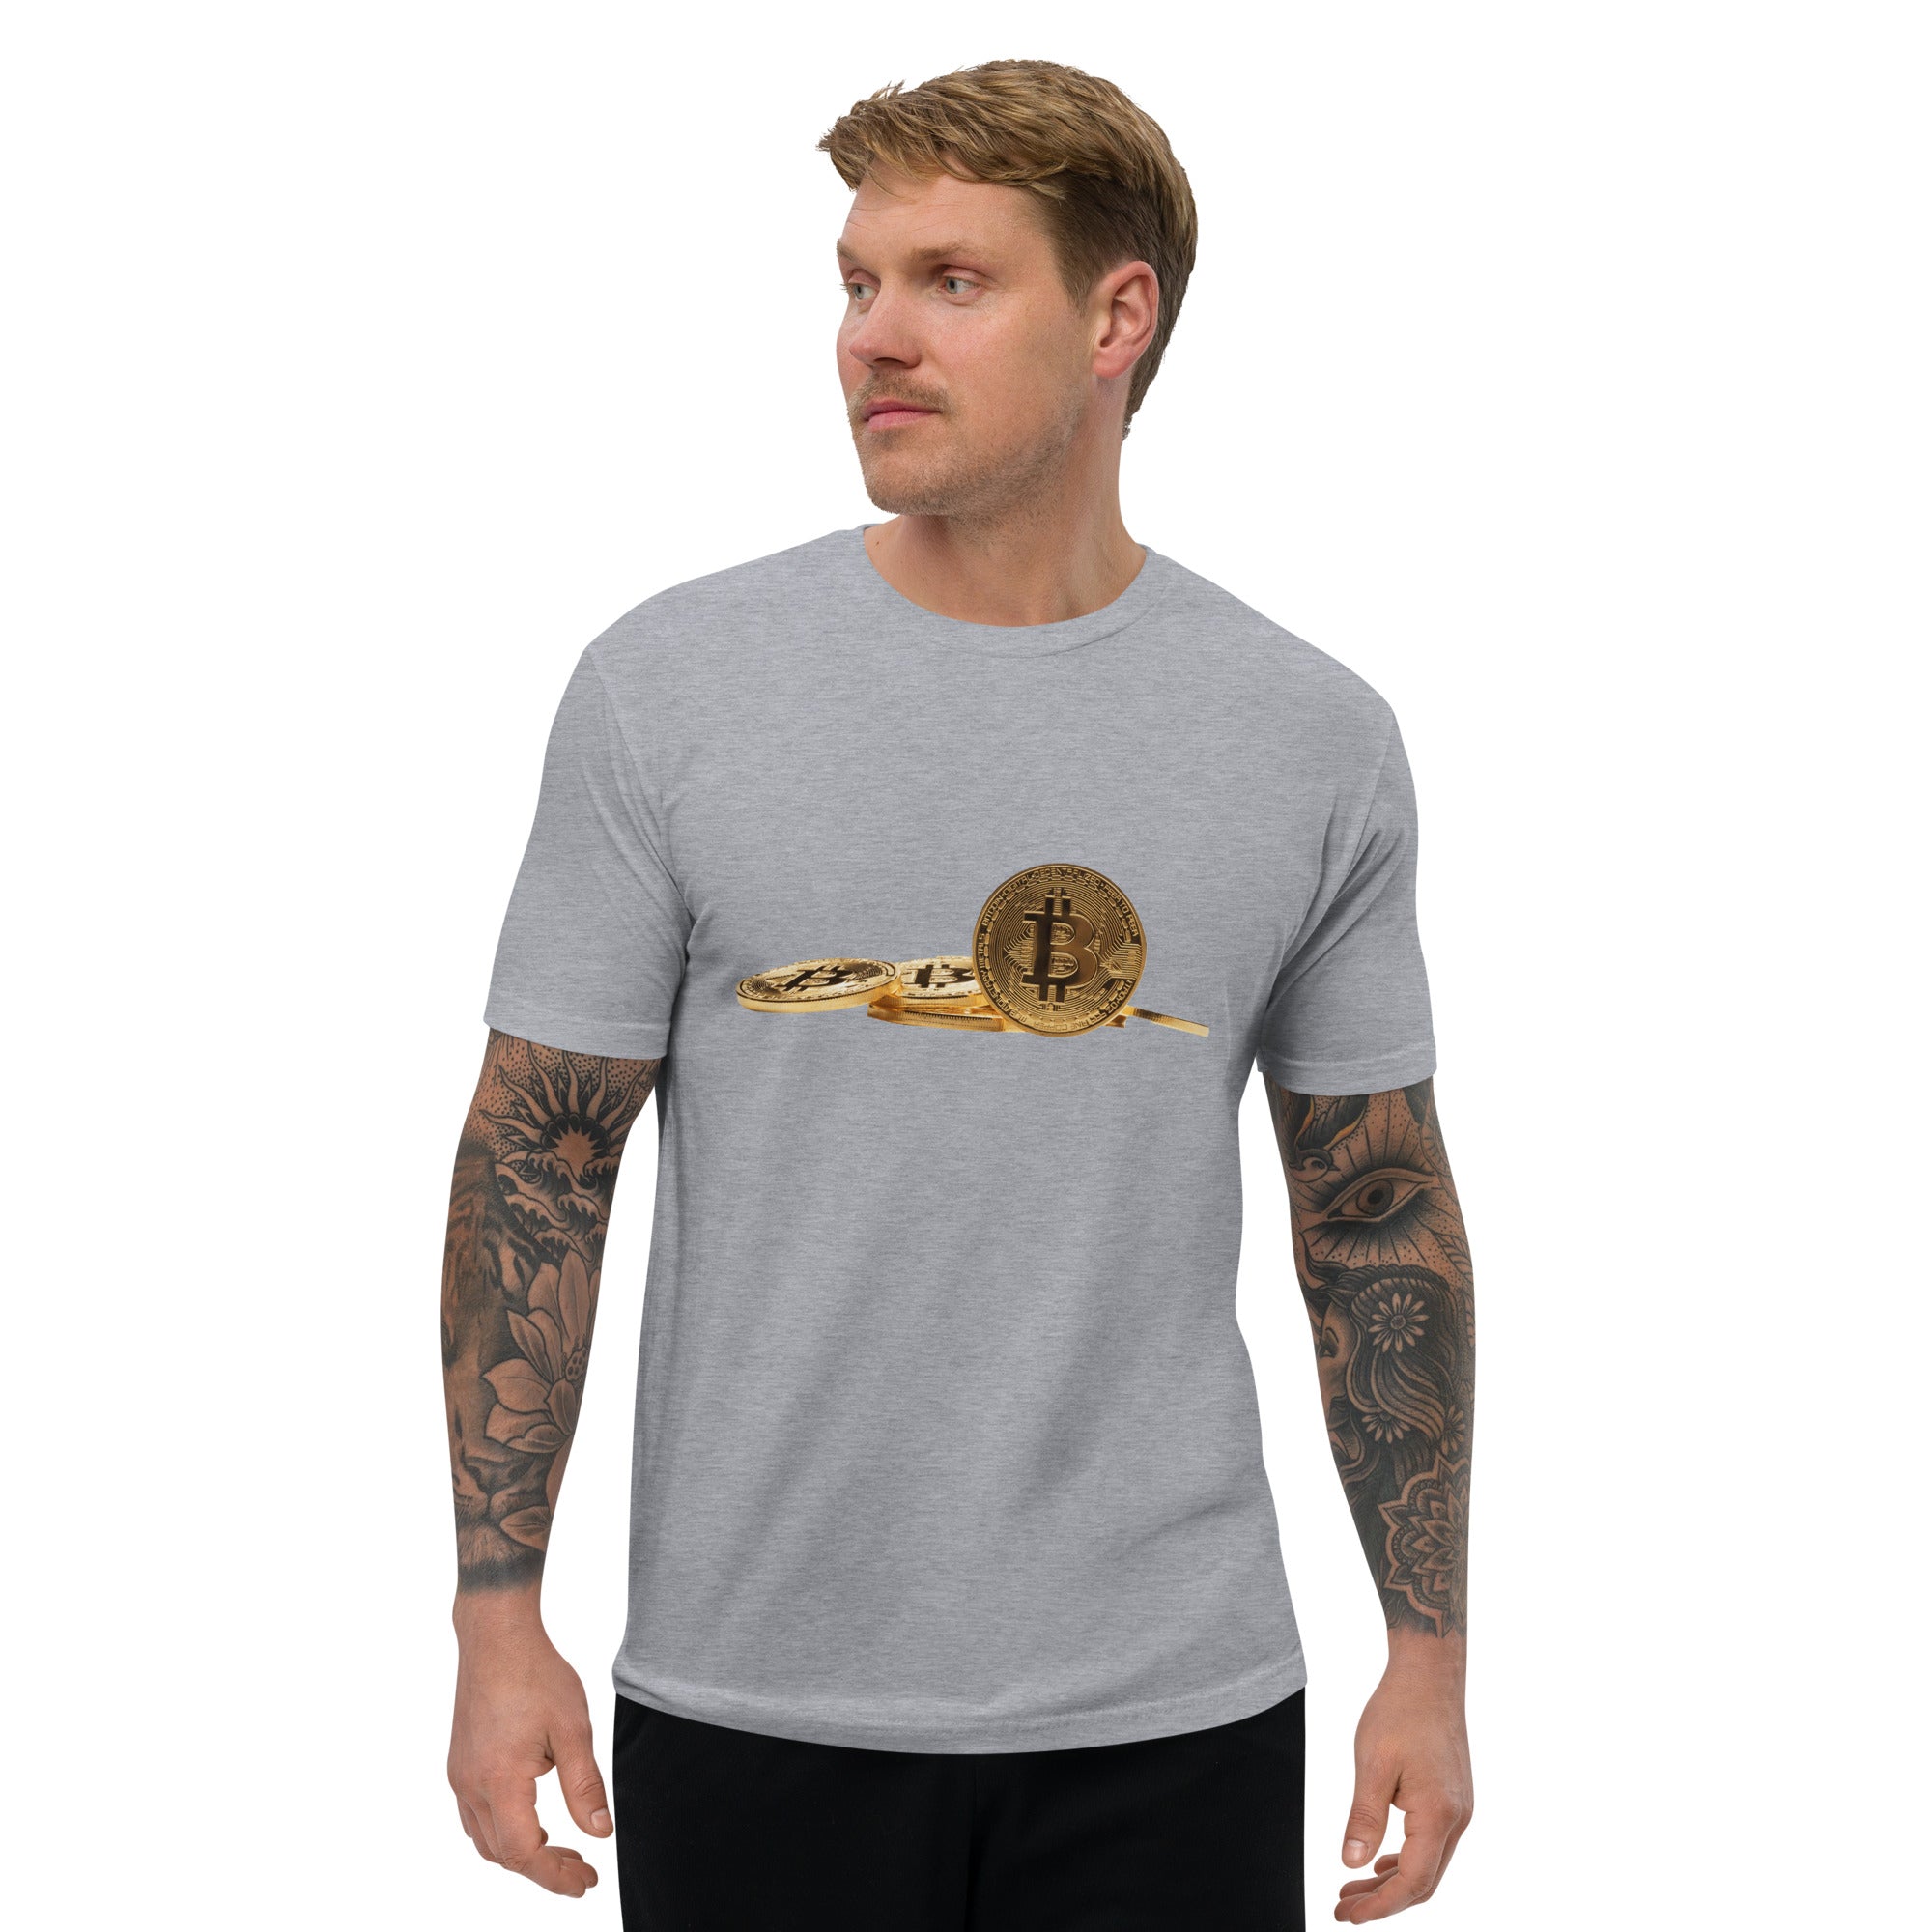 Bitcoin Short Sleeve T-shirt